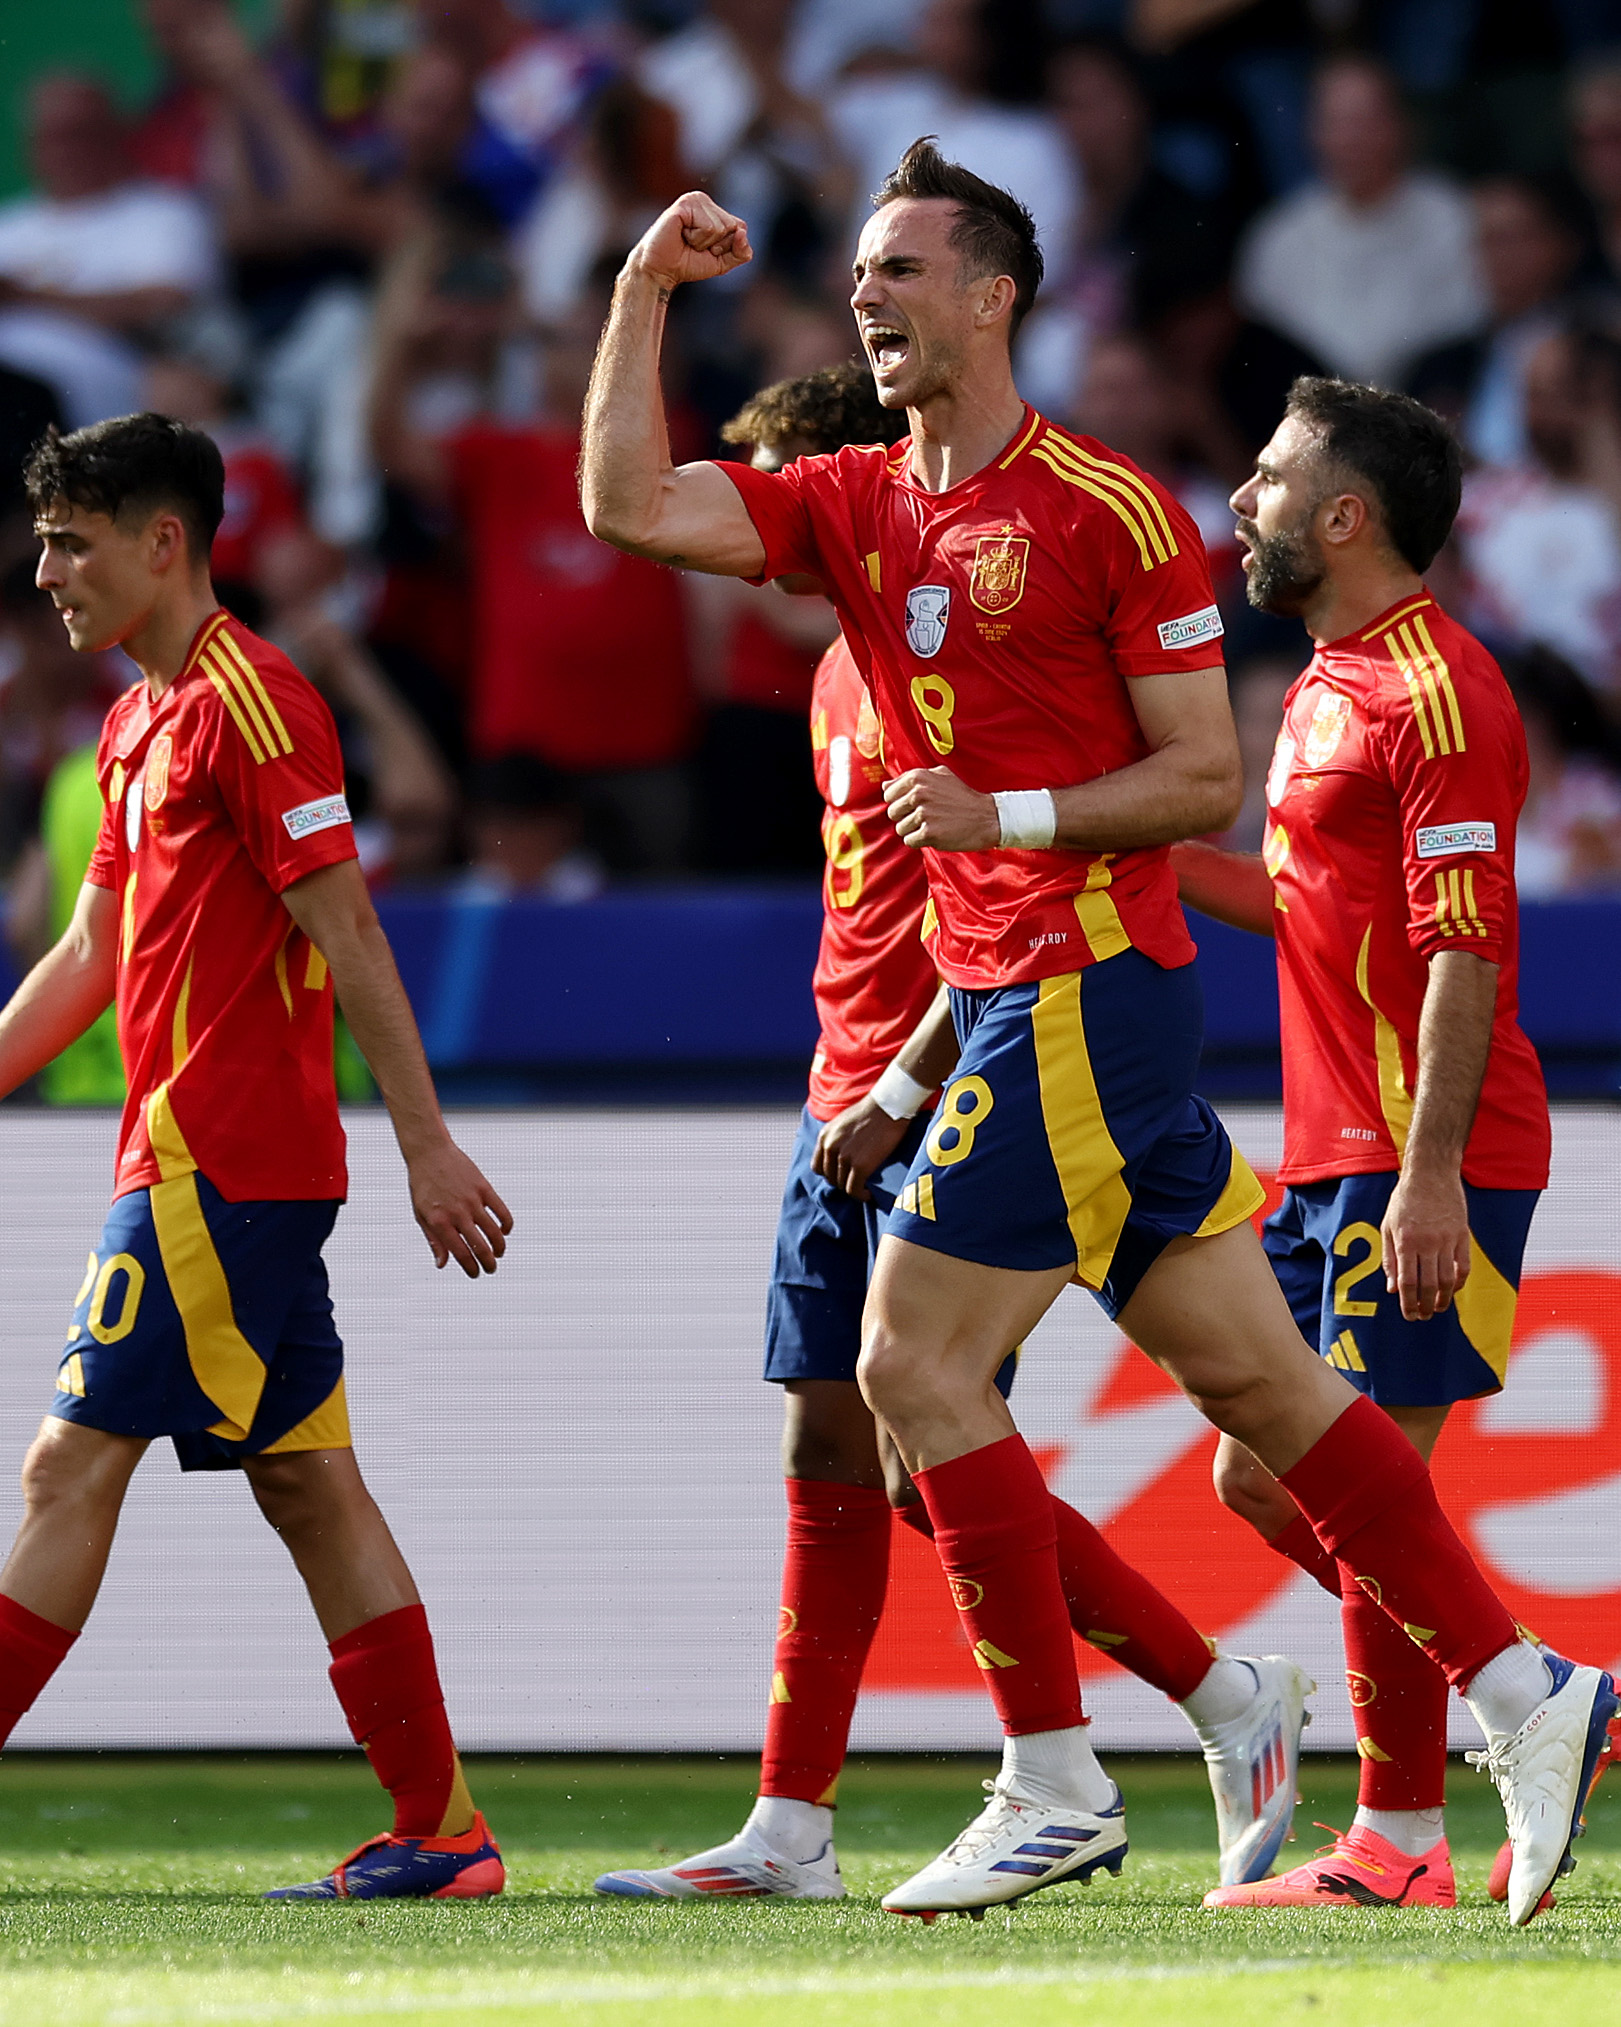 Spain 3-0 Croatia